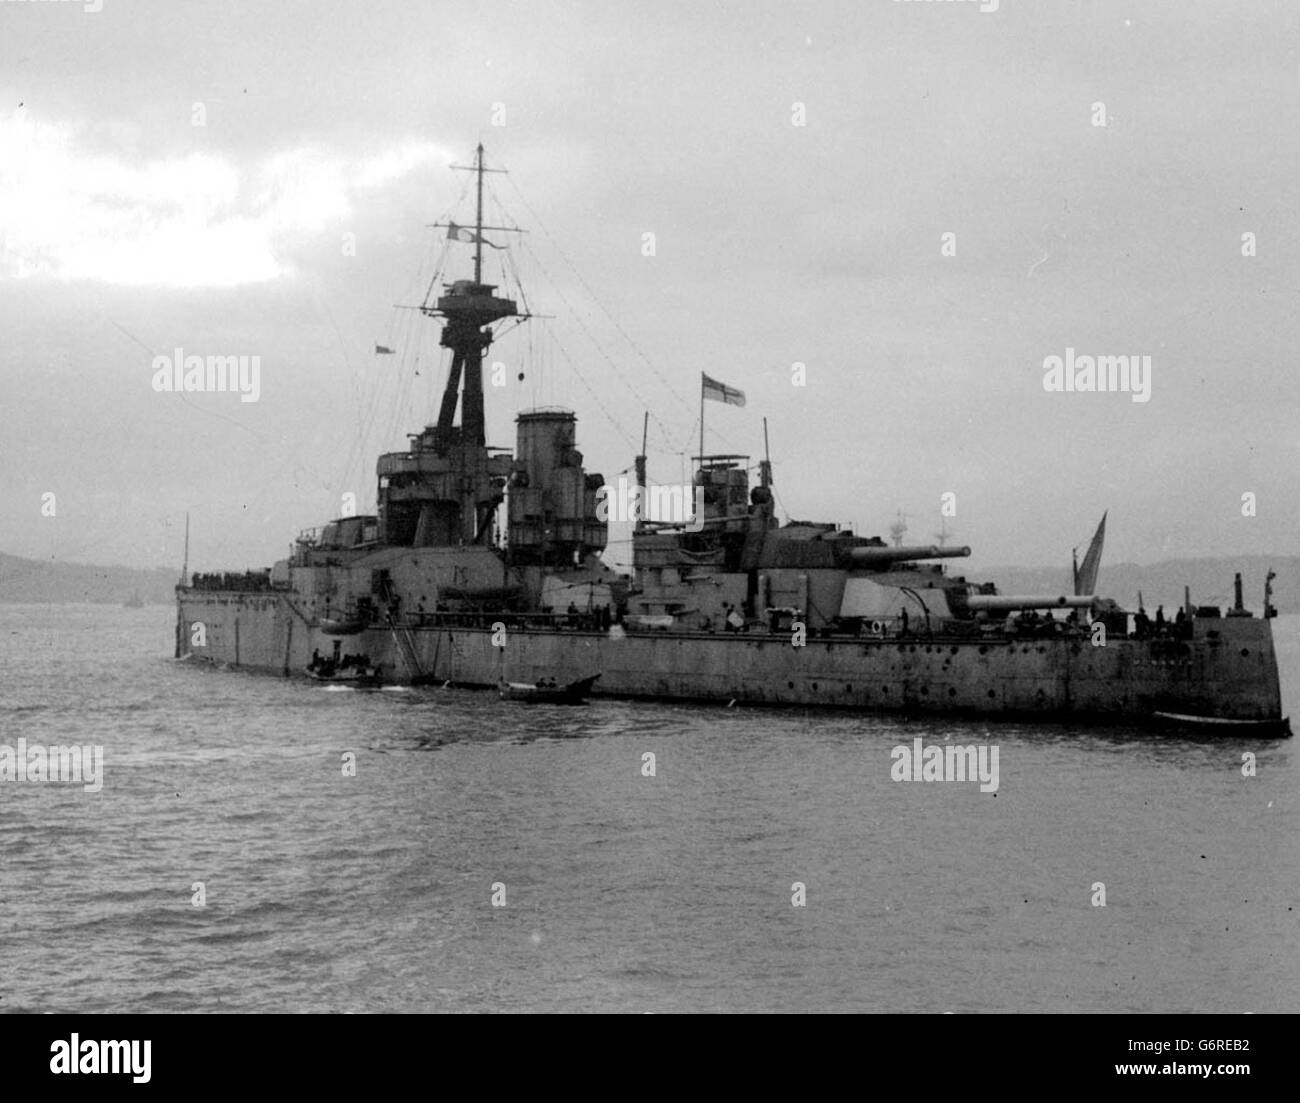 Battle of Jutland veteran HMS Monarch at anchor at Rosyth in 1919. Stock Photo